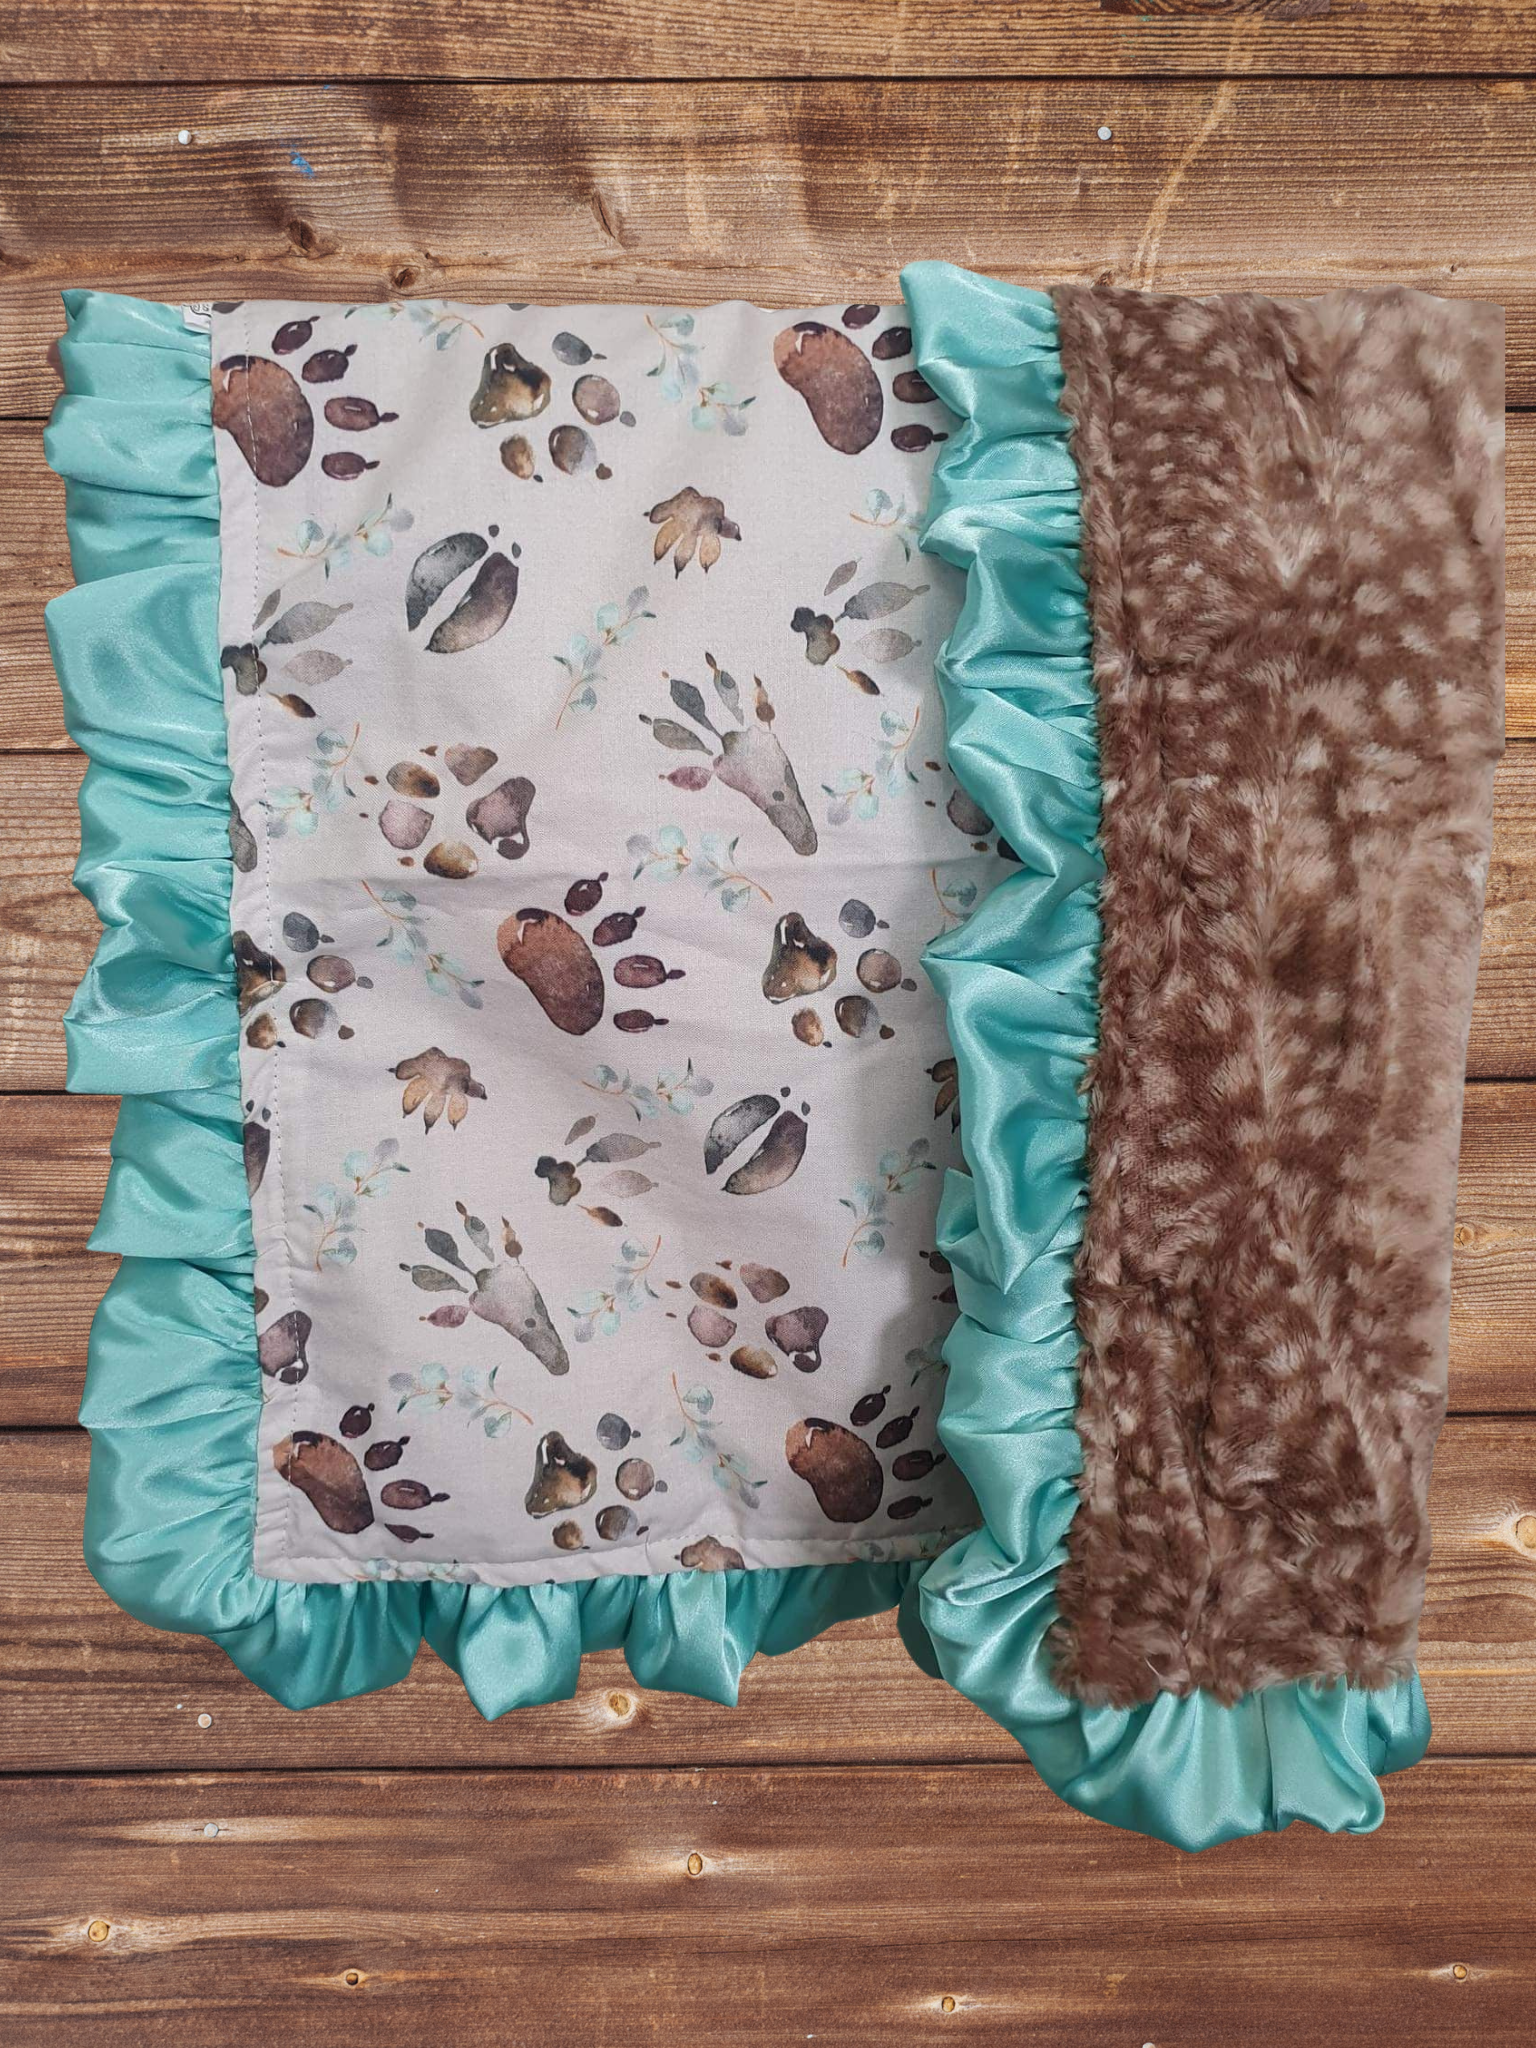 Baby Ruffle Blanket - Woodland Animal Tracks and Fawn Minky Woodland Blanket - DBC Baby Bedding Co 